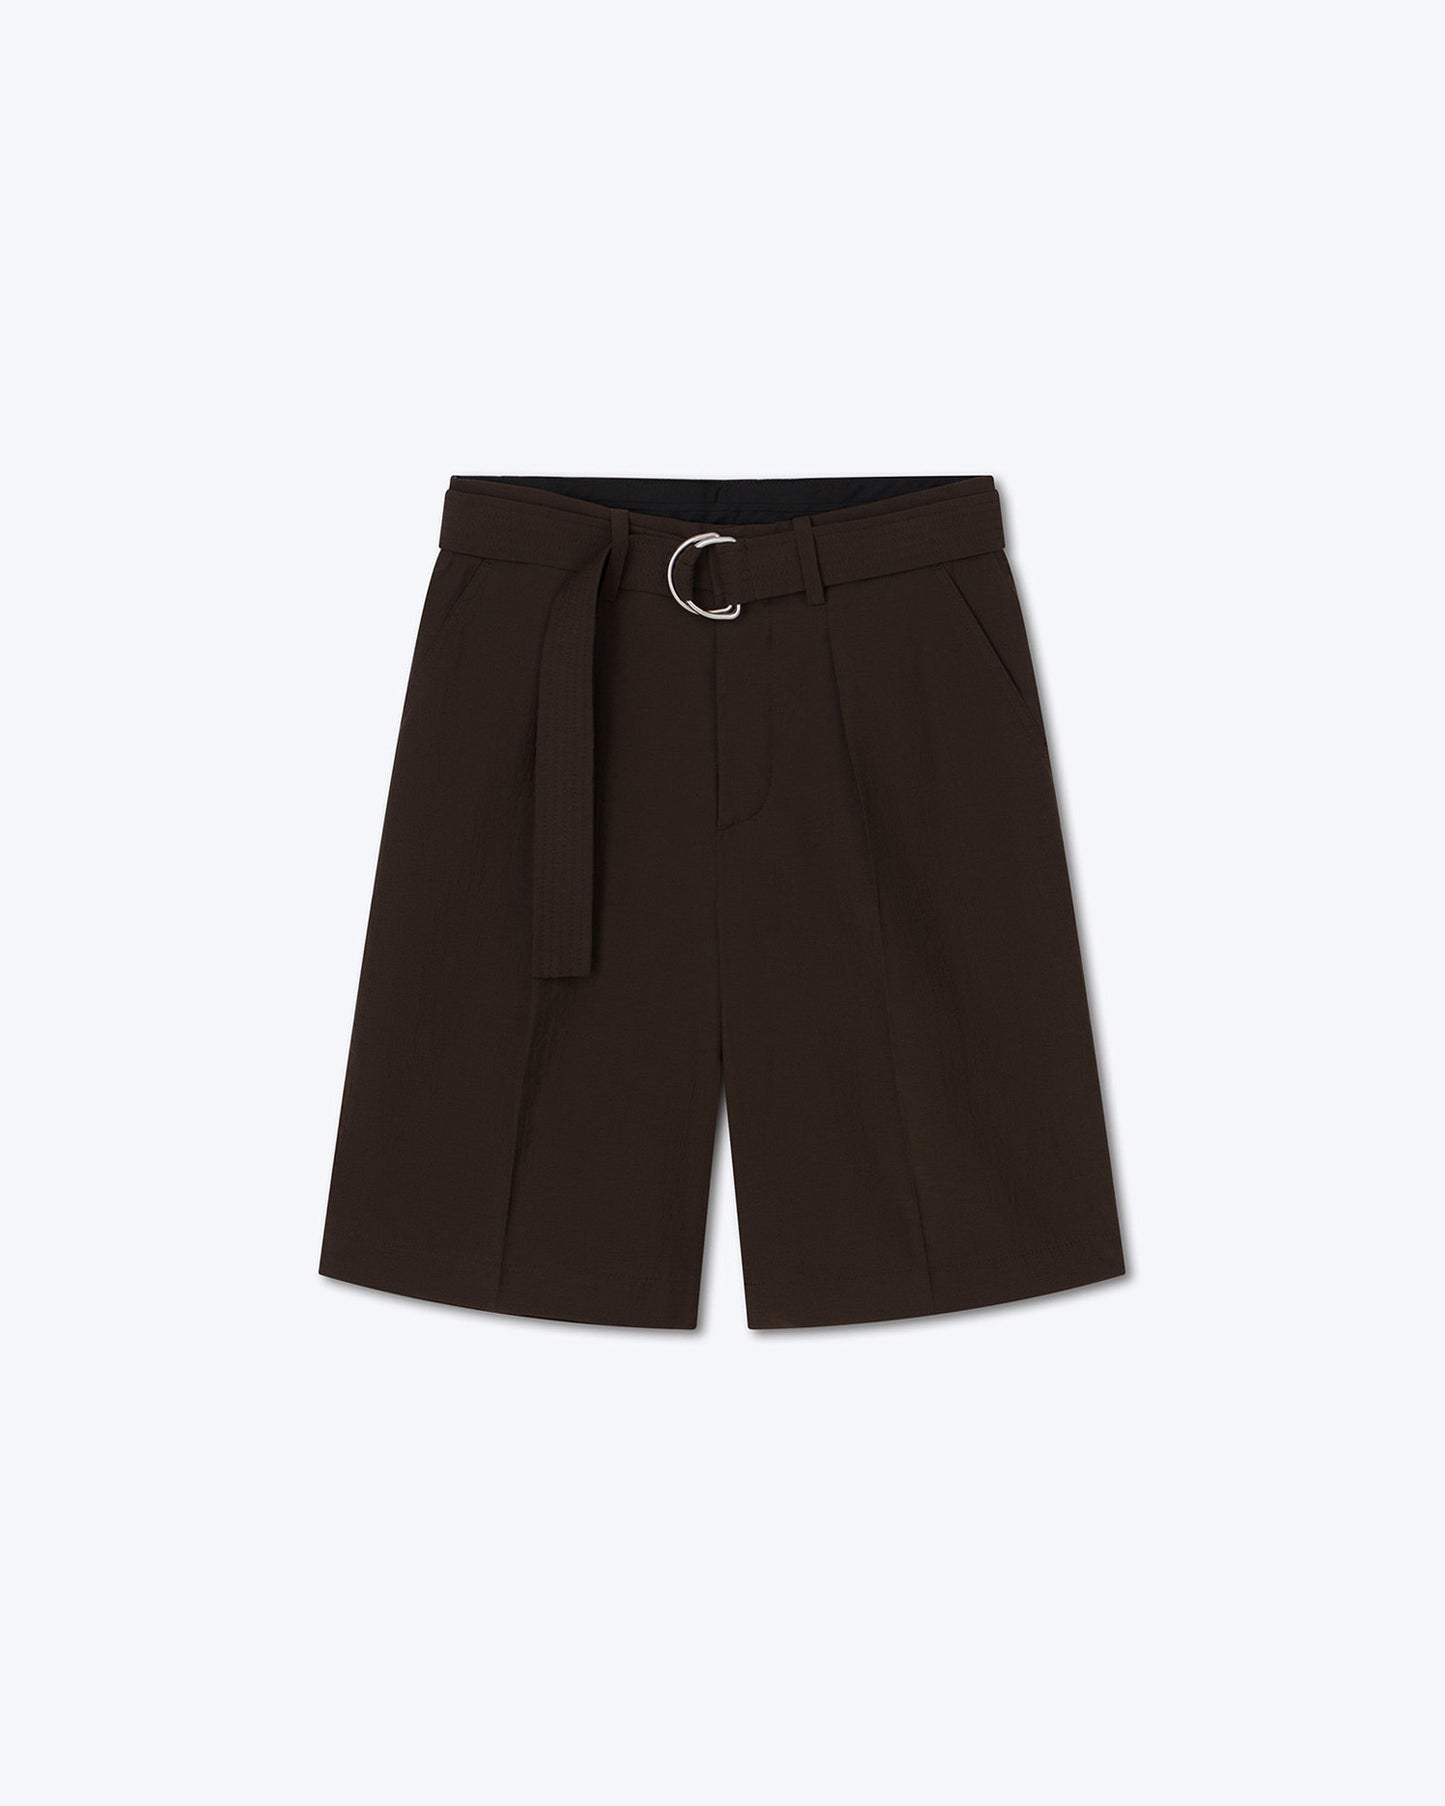 Sadi - Sale Cotton-Crepe Shorts - Dark Brown